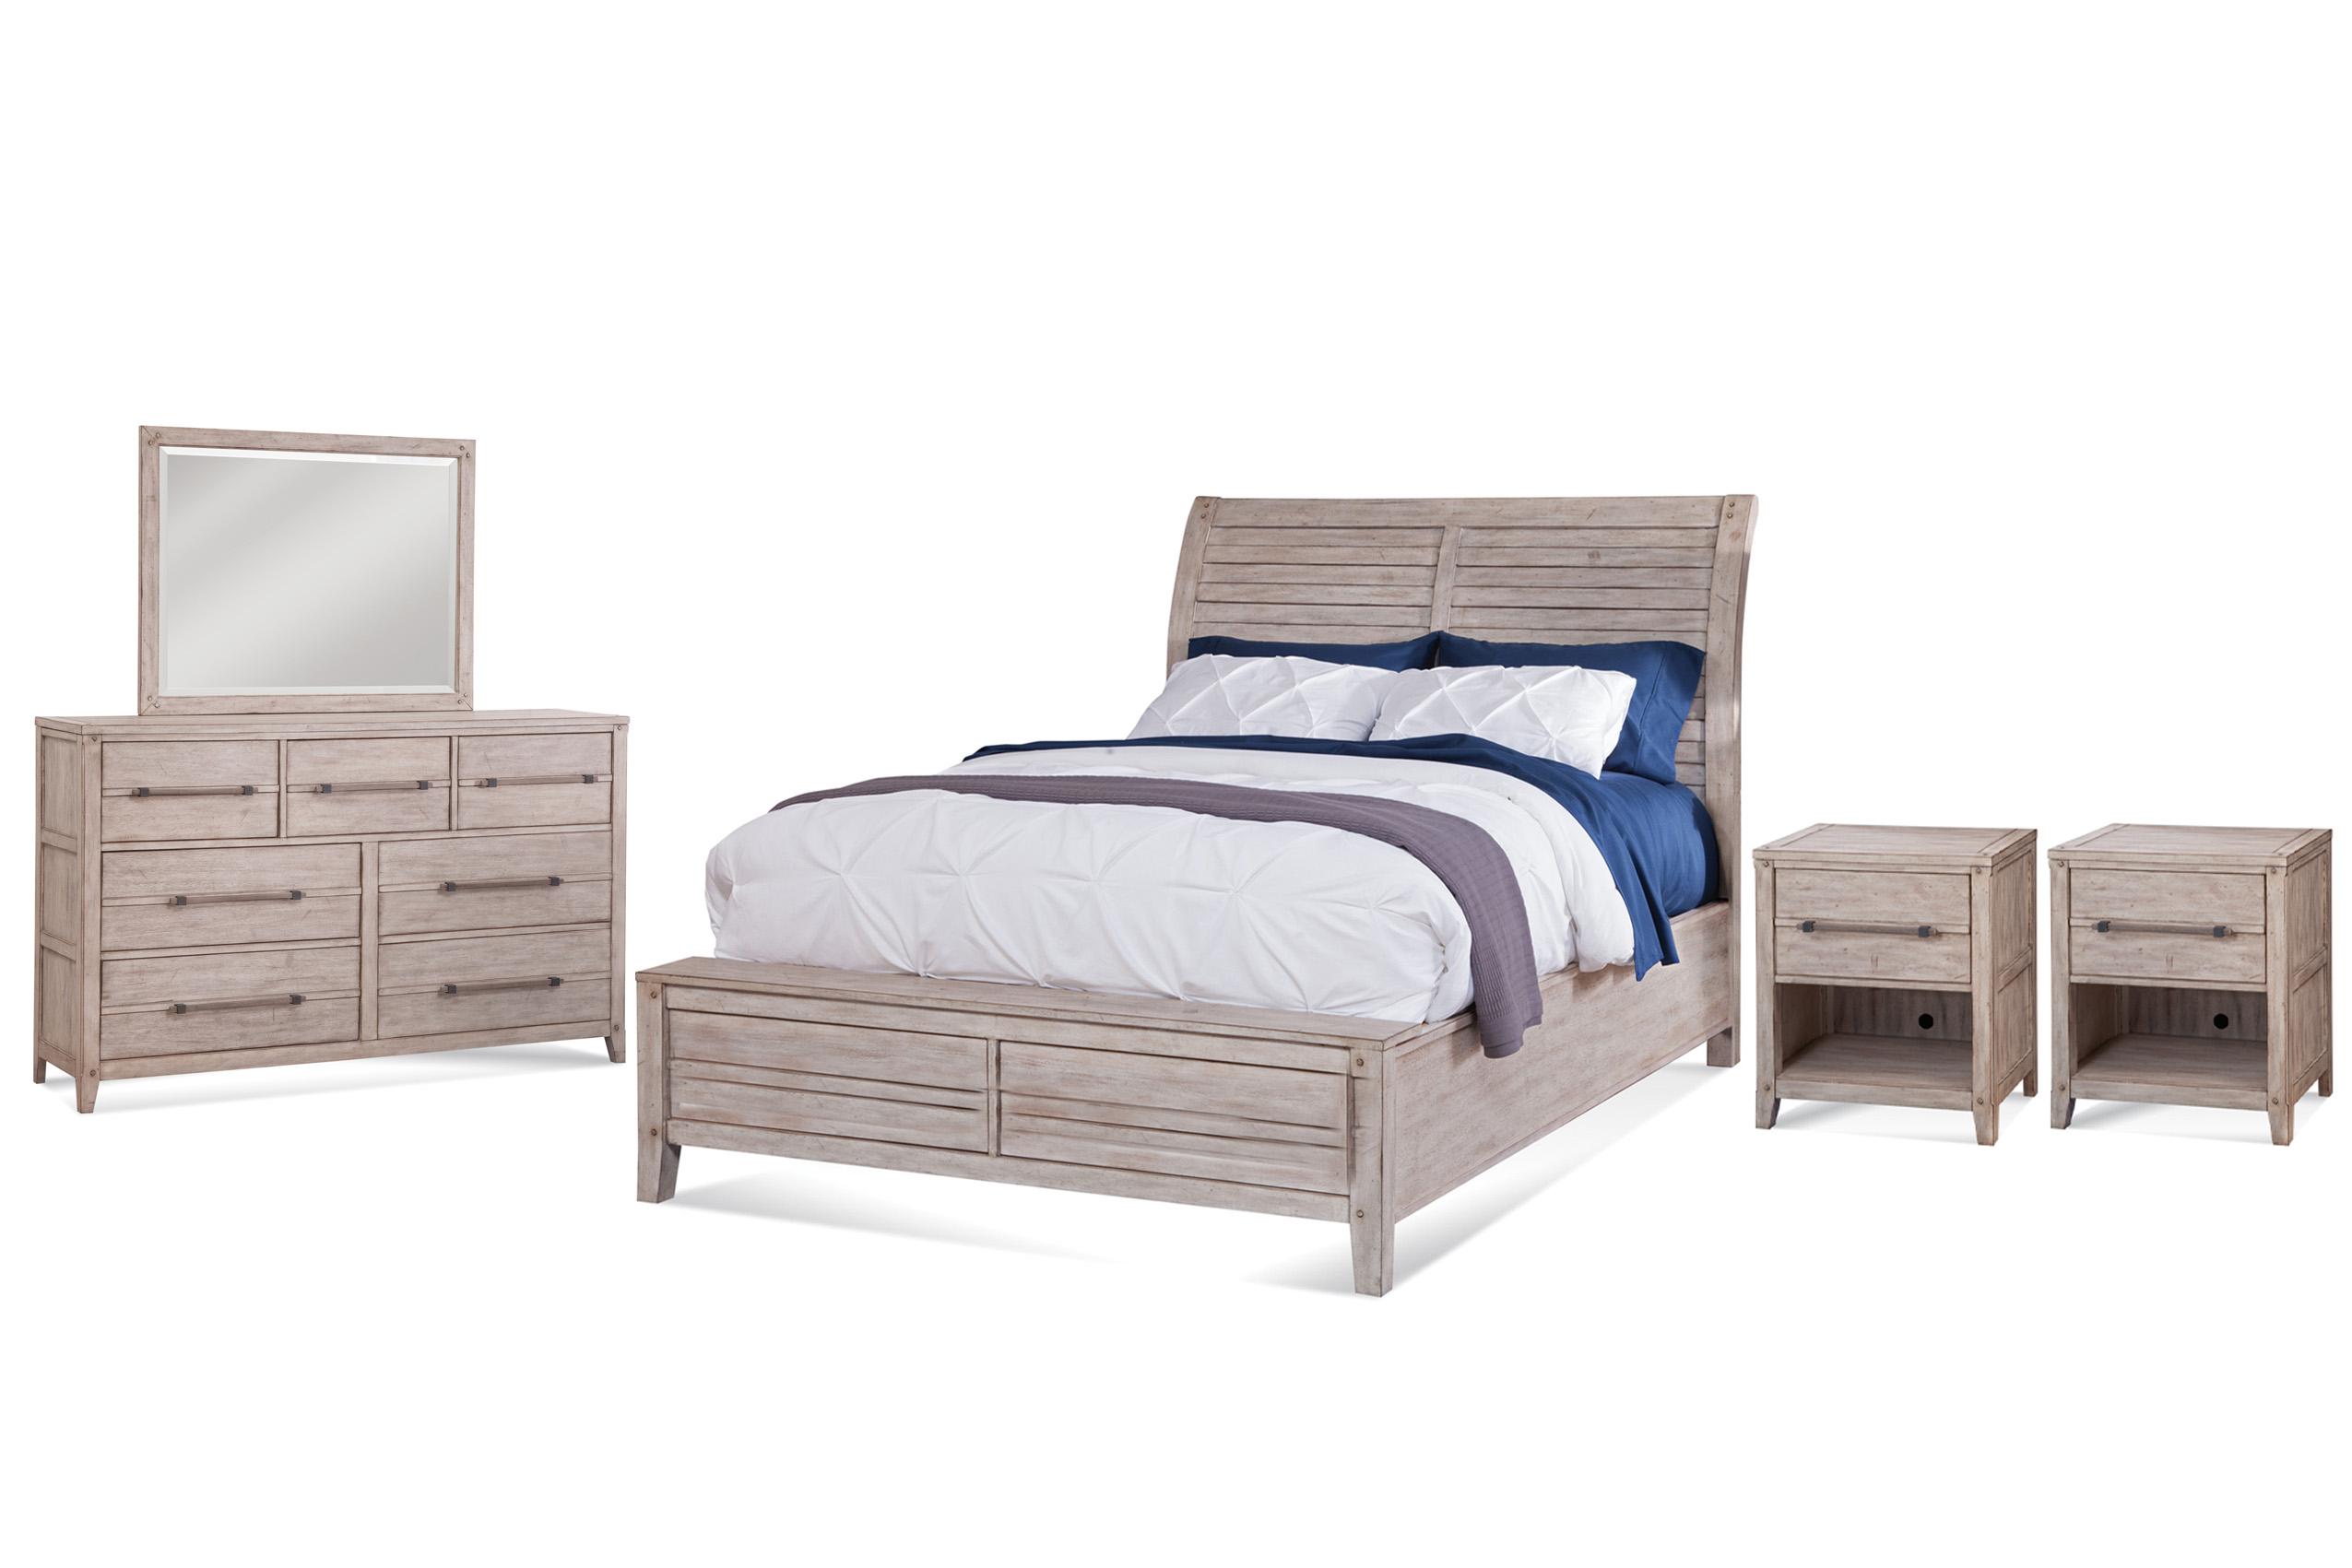 Classic, Traditional Sleigh Bedroom Set AURORA 2810-66SLP 2810-66SLPN-2NDM-5PC in whitewash 